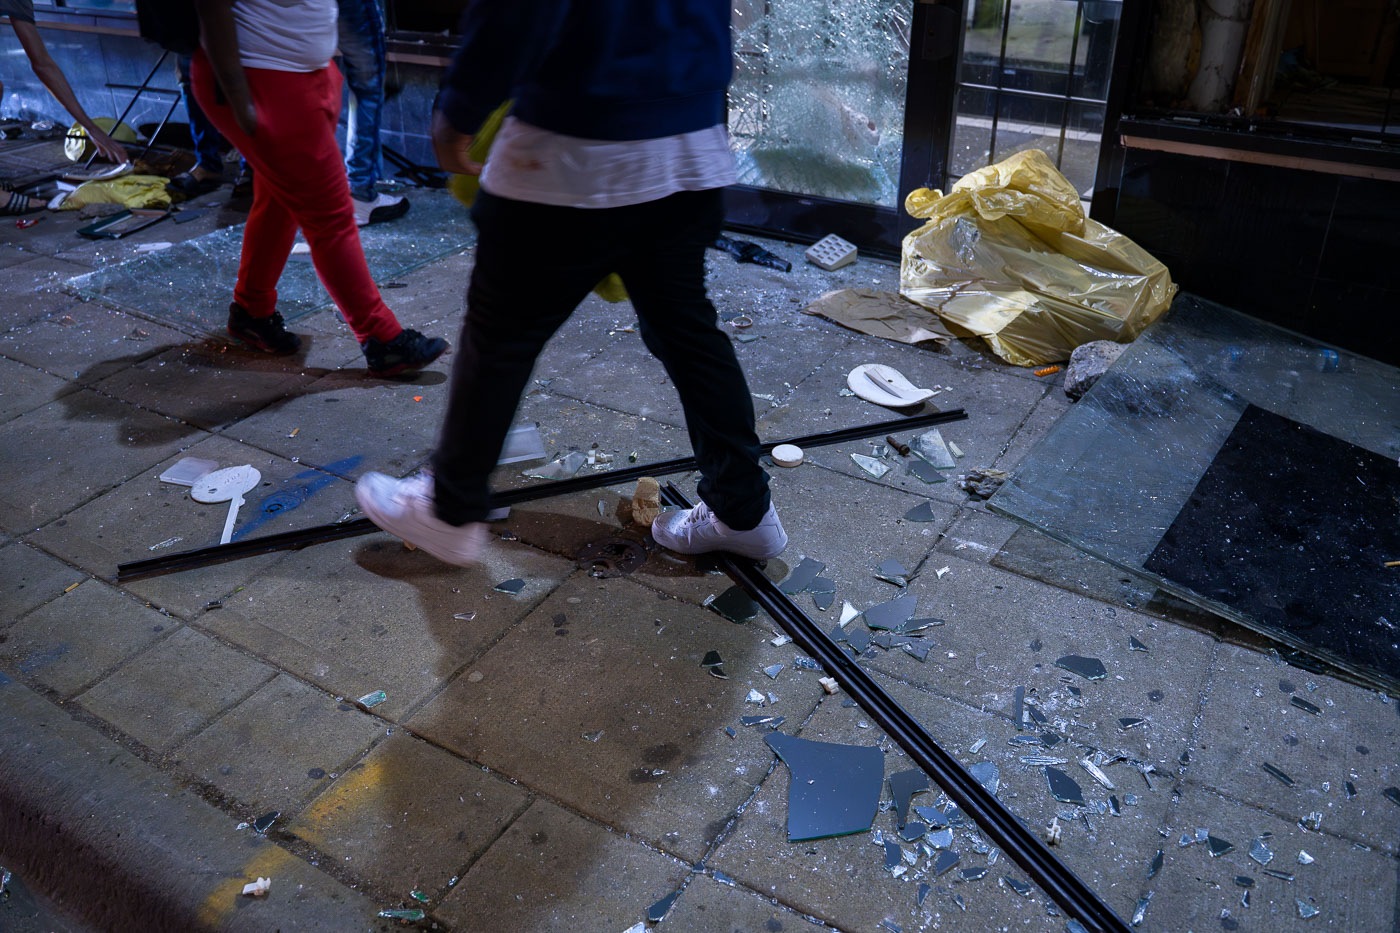 Riot damaged store on Lake Street in Minneapolis